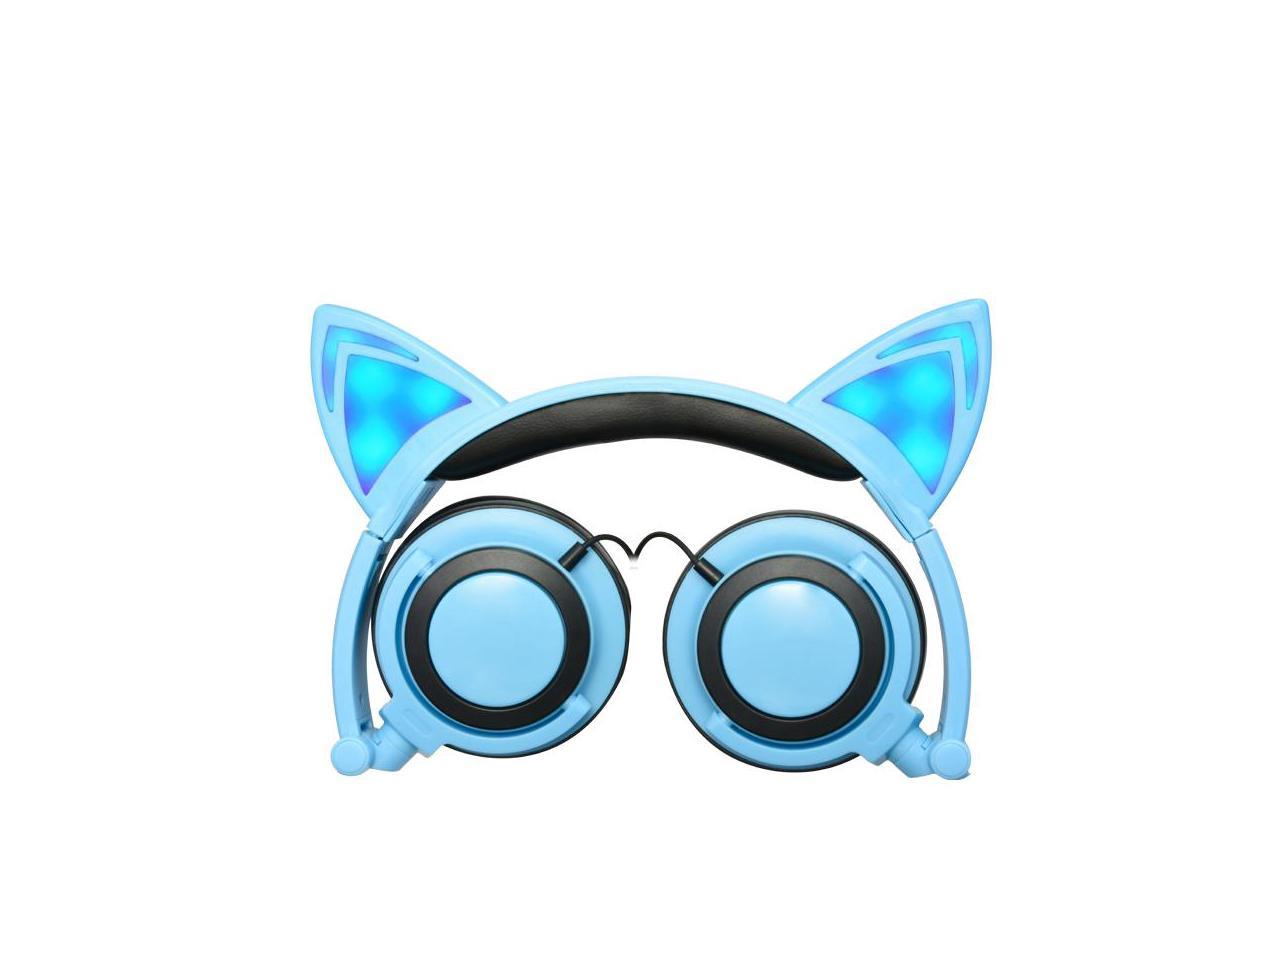 KOMRT Lovely Cat Ear Like Headphone with Blinking LED Lights, Stereo Voice Quality for Computer, Laptop, Cellphone - Blue